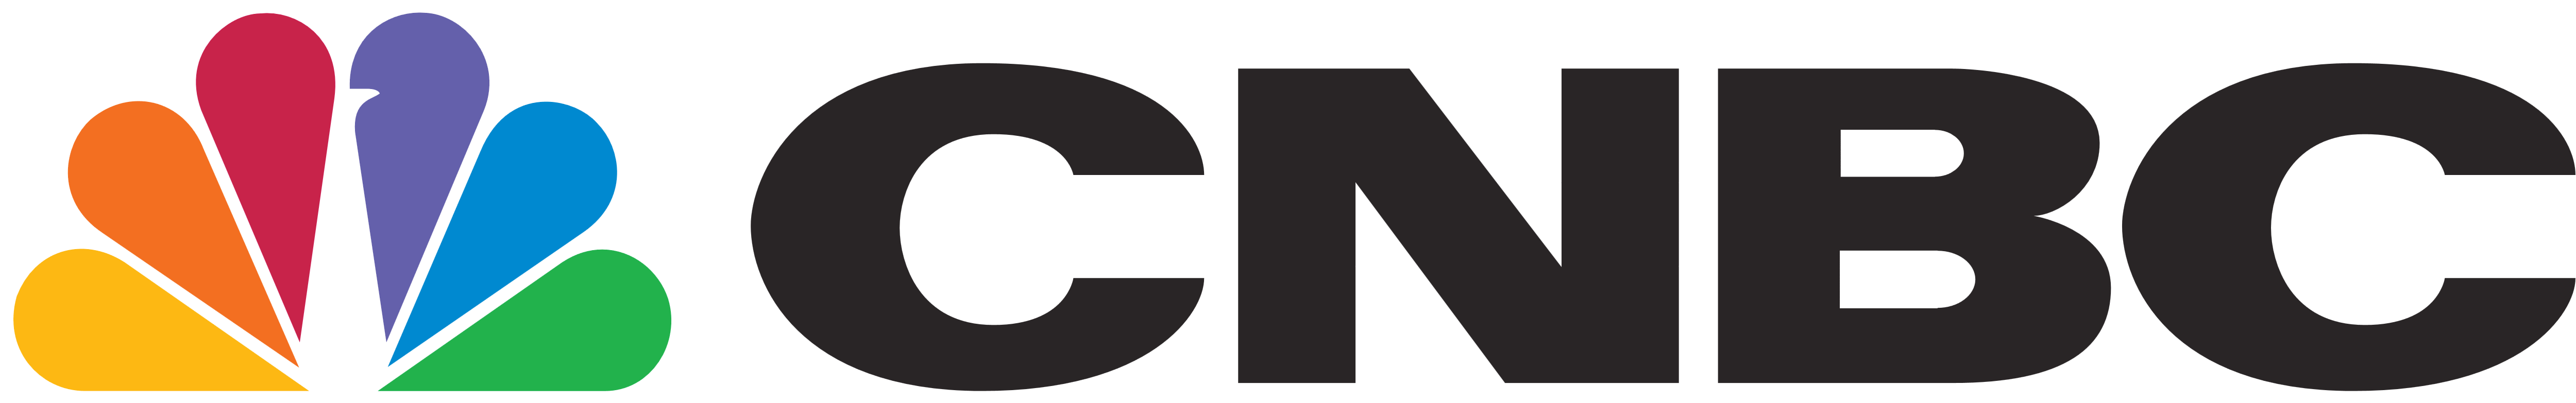 CNBC logo, graphic